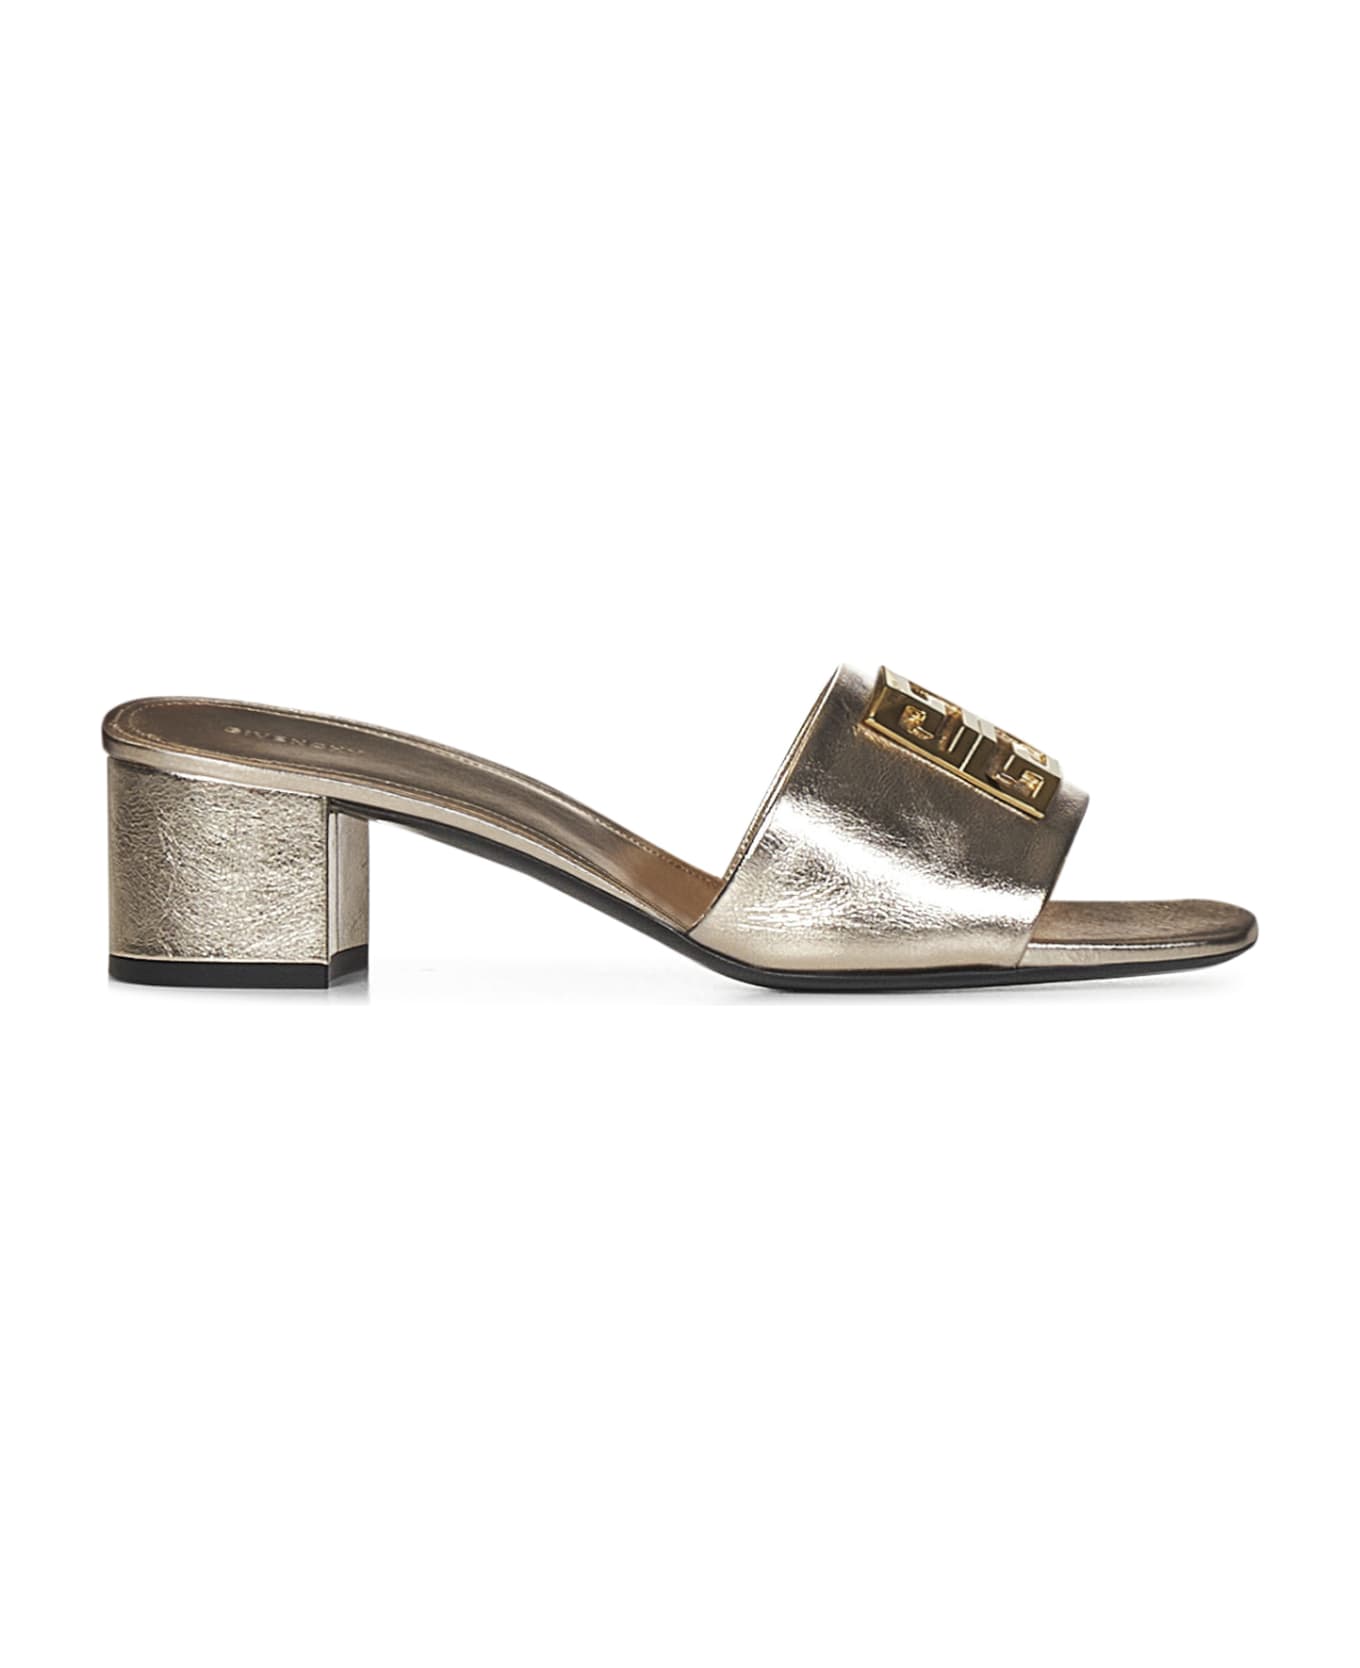 Givenchy 4g Heel Sandals - Golden サンダル